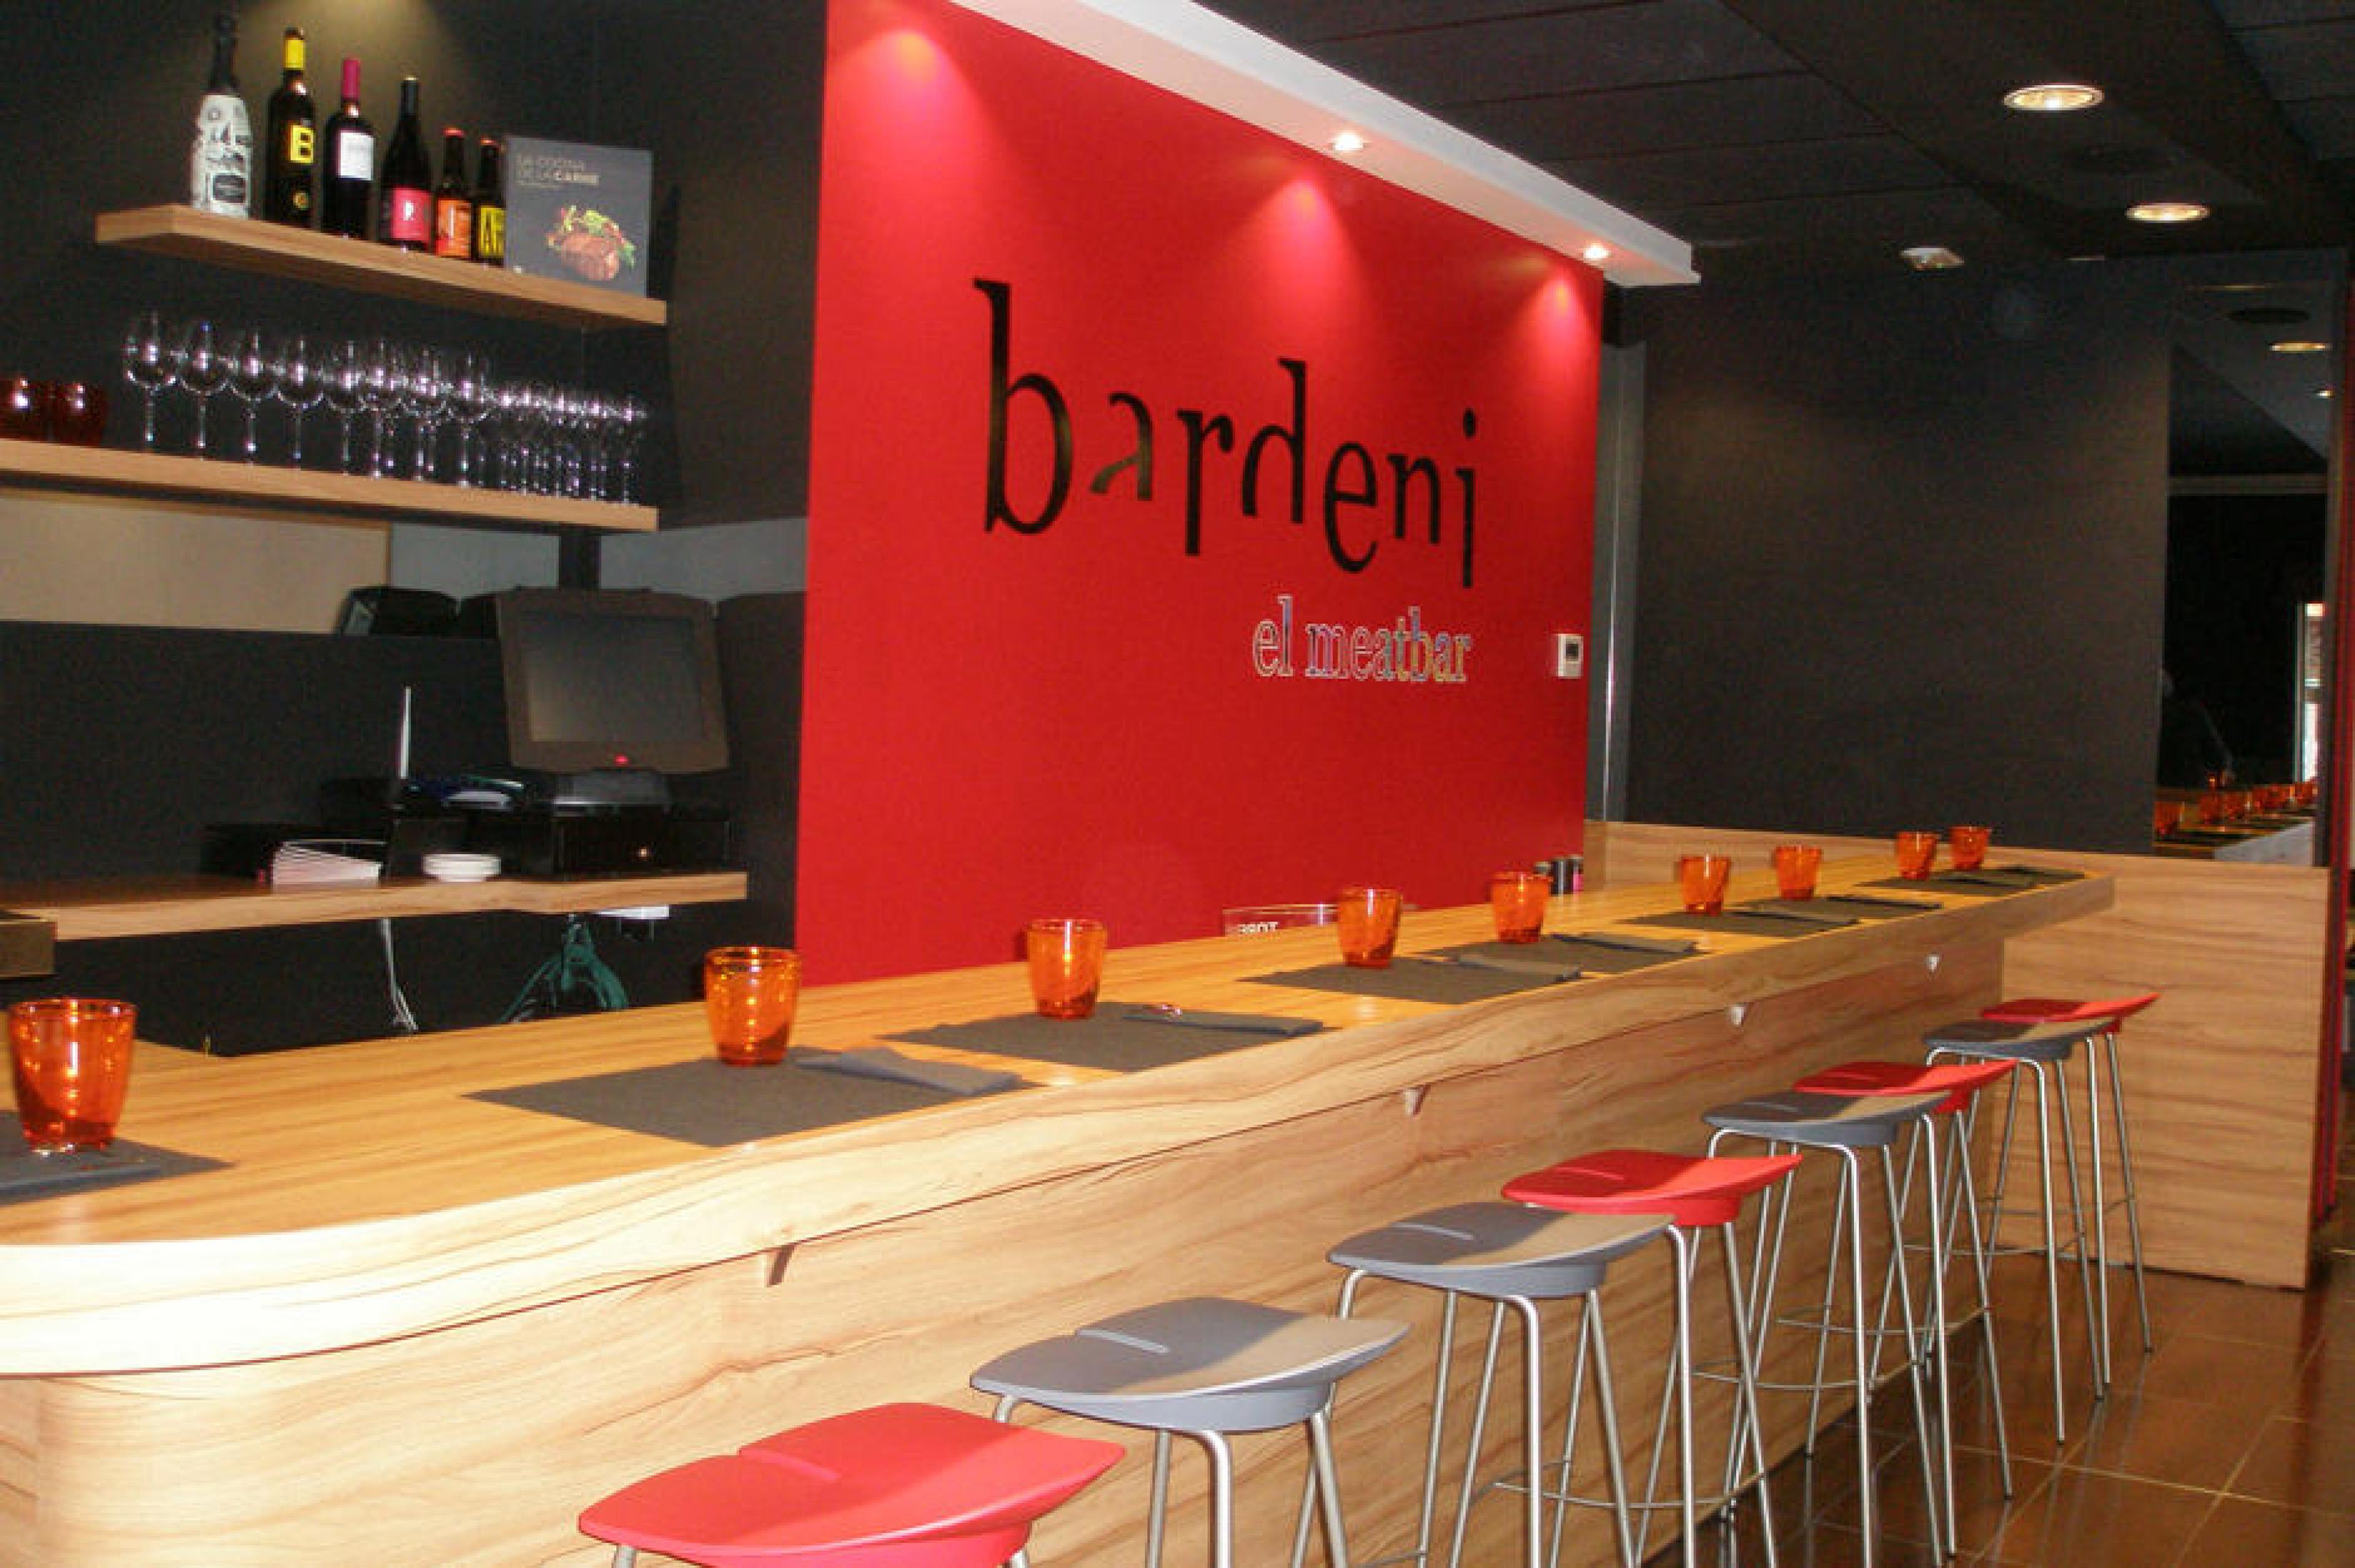 Bar at Bardeni el Meatbar, Barcelona, Spain